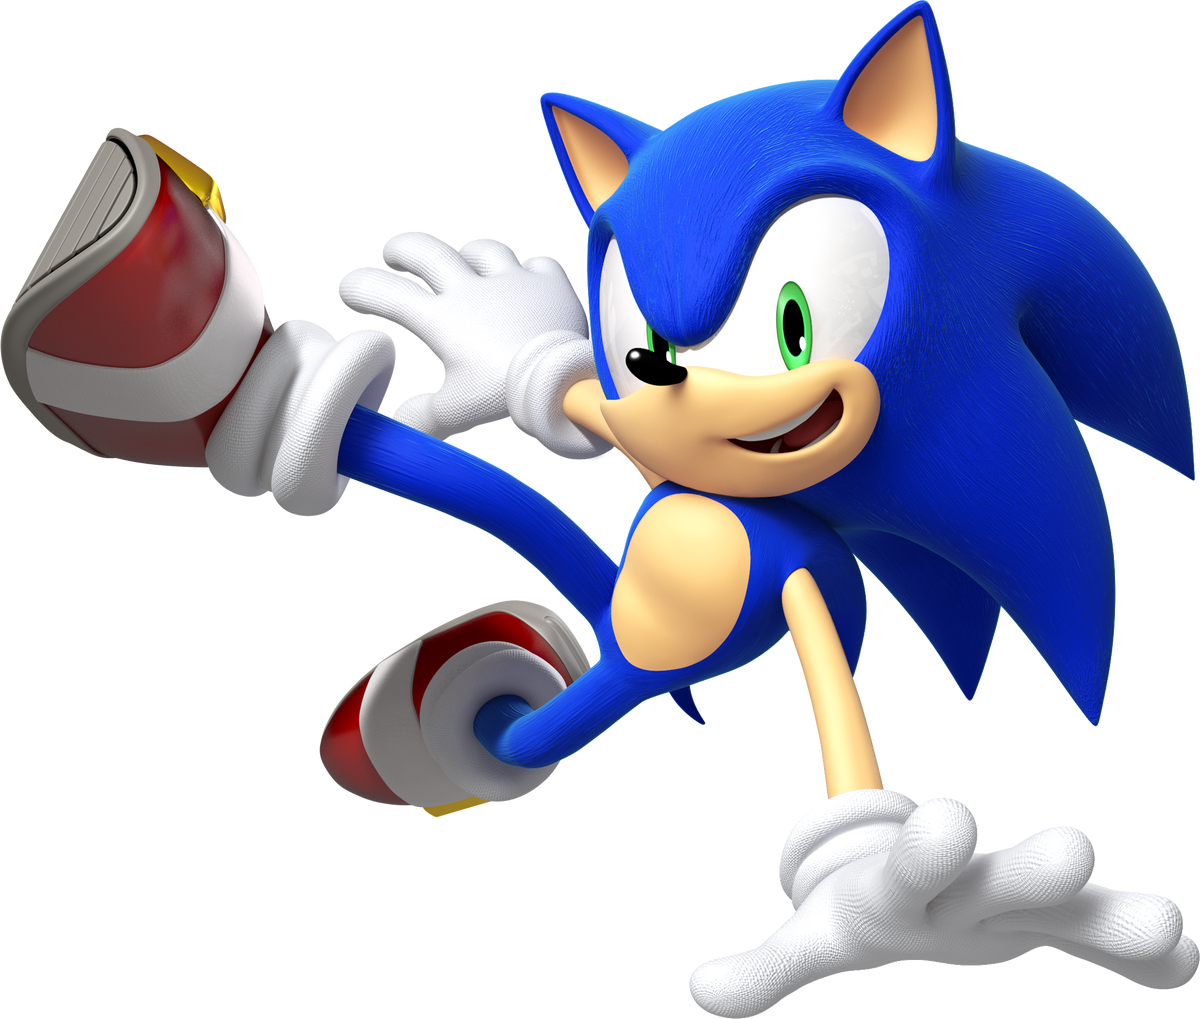 Sonic the Hedgehog 3 (Video Game 1993) - IMDb